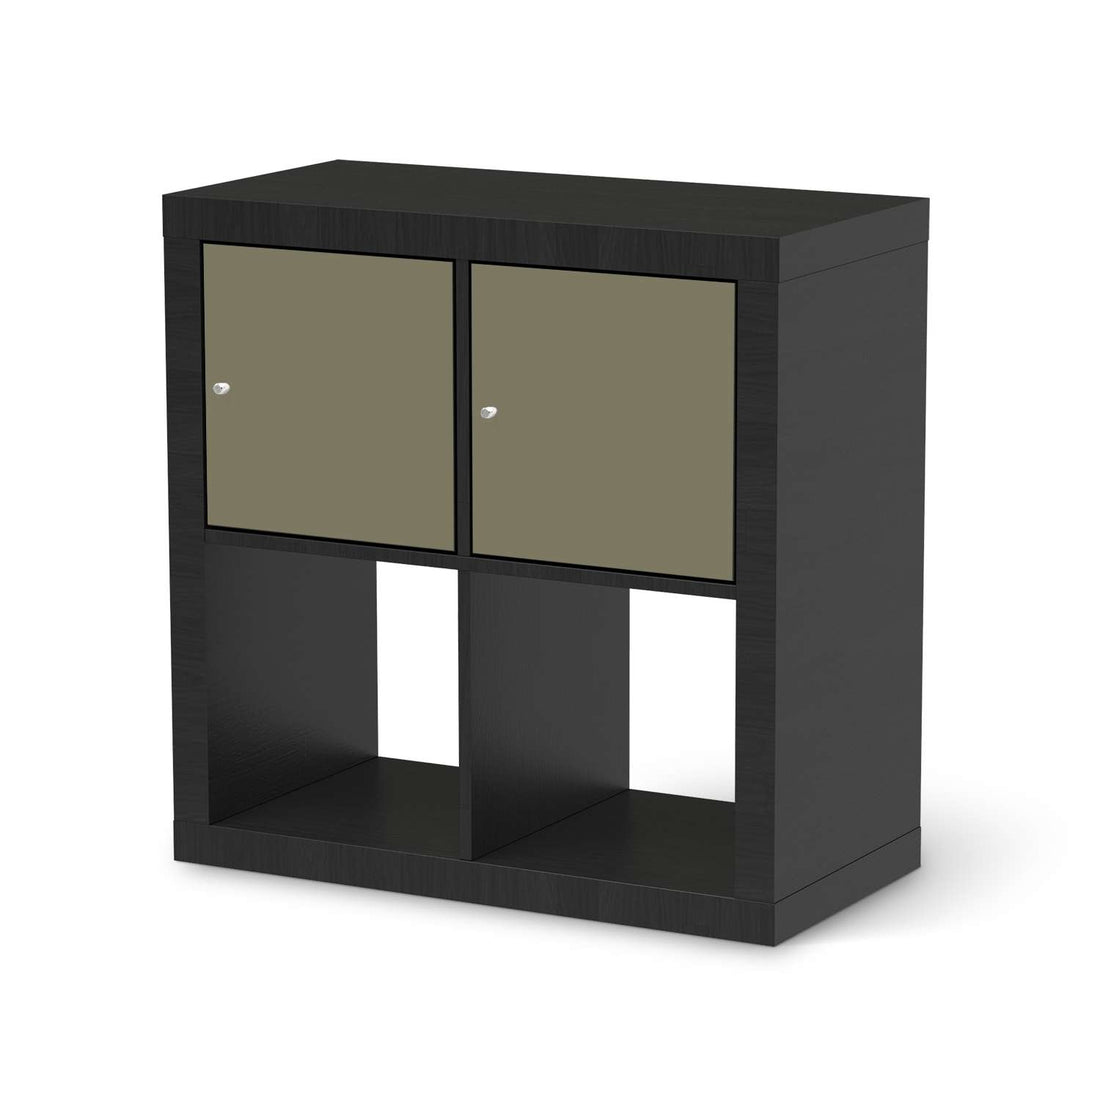 Möbel Klebefolie Braungrau Light - IKEA Expedit Regal 2 Türen Quer - schwarz